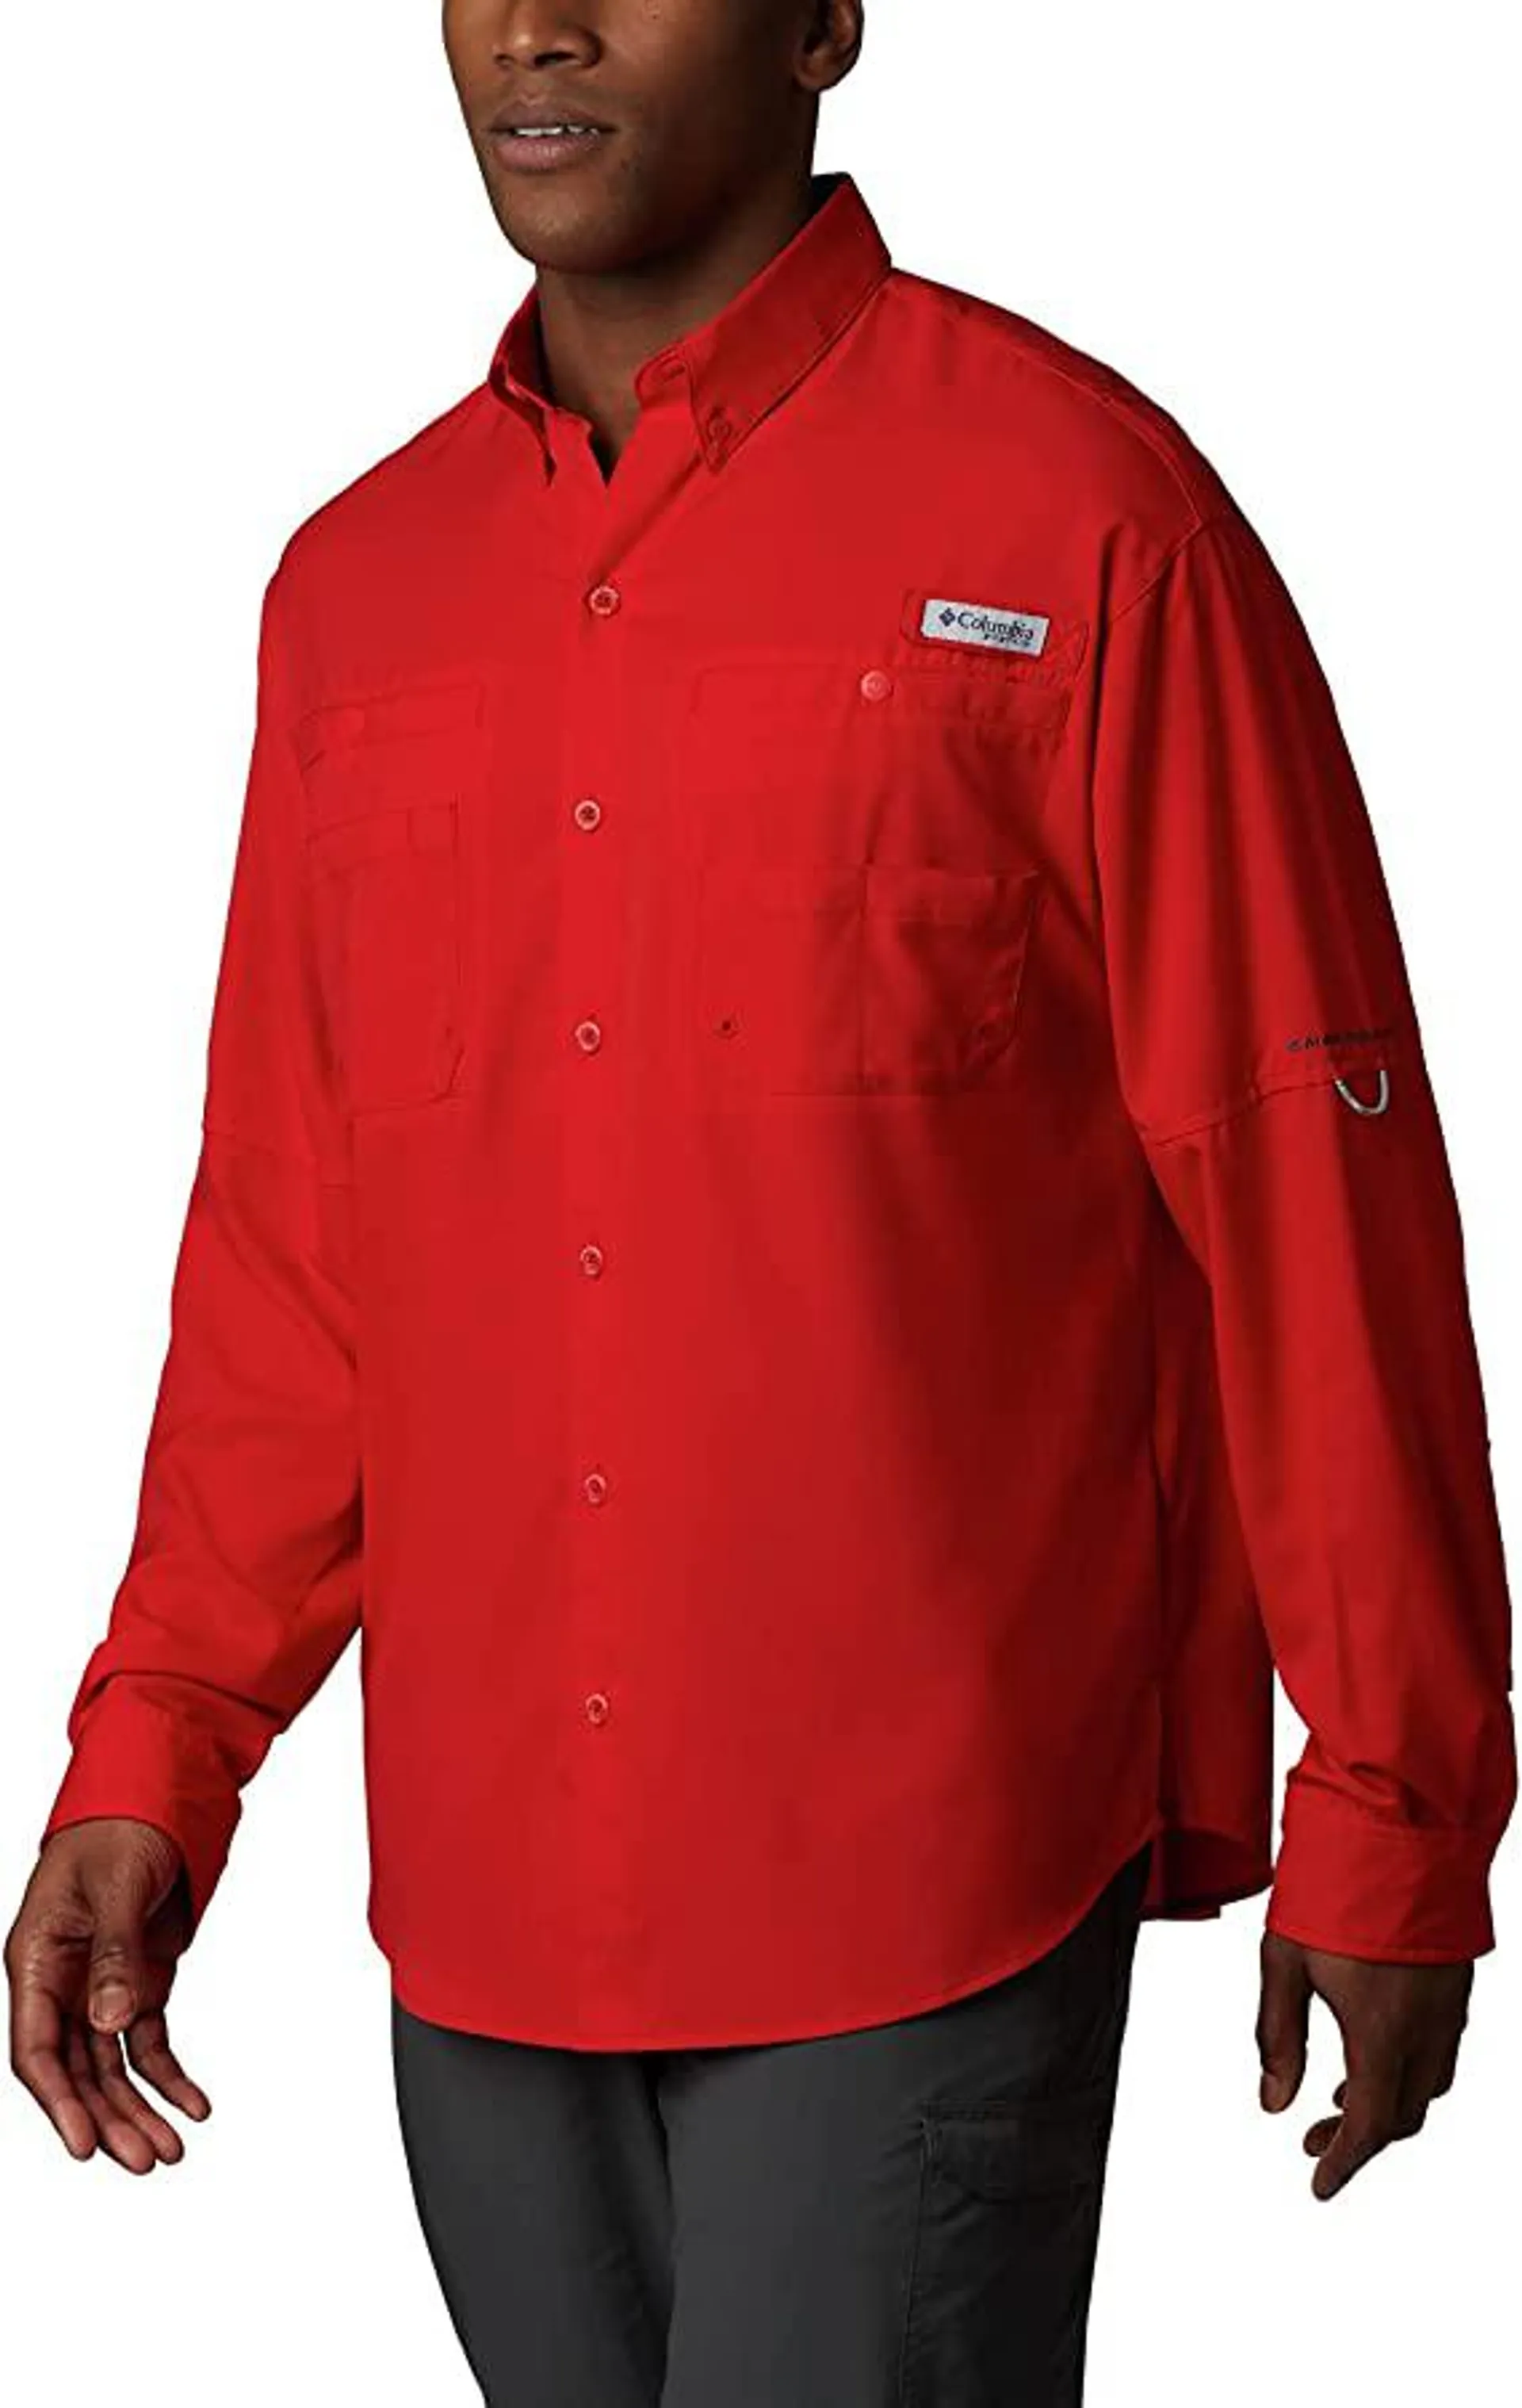 Columbia Men's Standard PFG Tamiami II UPF 40 Long Sleeve Fishing Shirt, Red Spark, Large